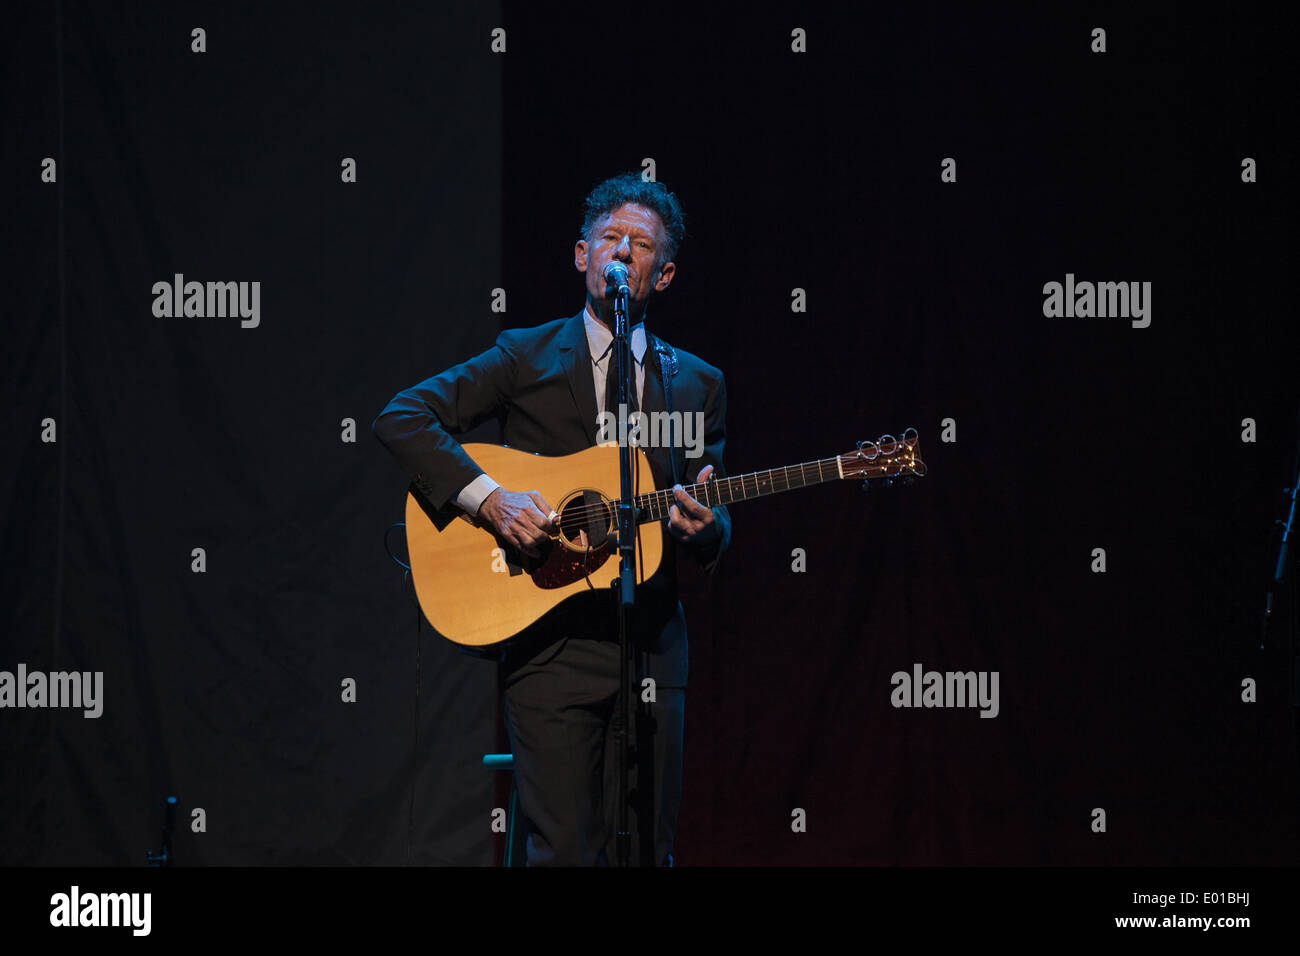 Austin, TX, USA. 25th Apr, 2014. Singer Lyle Lovett performs at the Austin City Limits Moody Theater on April 25, 2014 for the MJ&M charity fundraiser. © Rustin Gudim/ZUMAPRESS.com/Alamy Live News Stock Photo